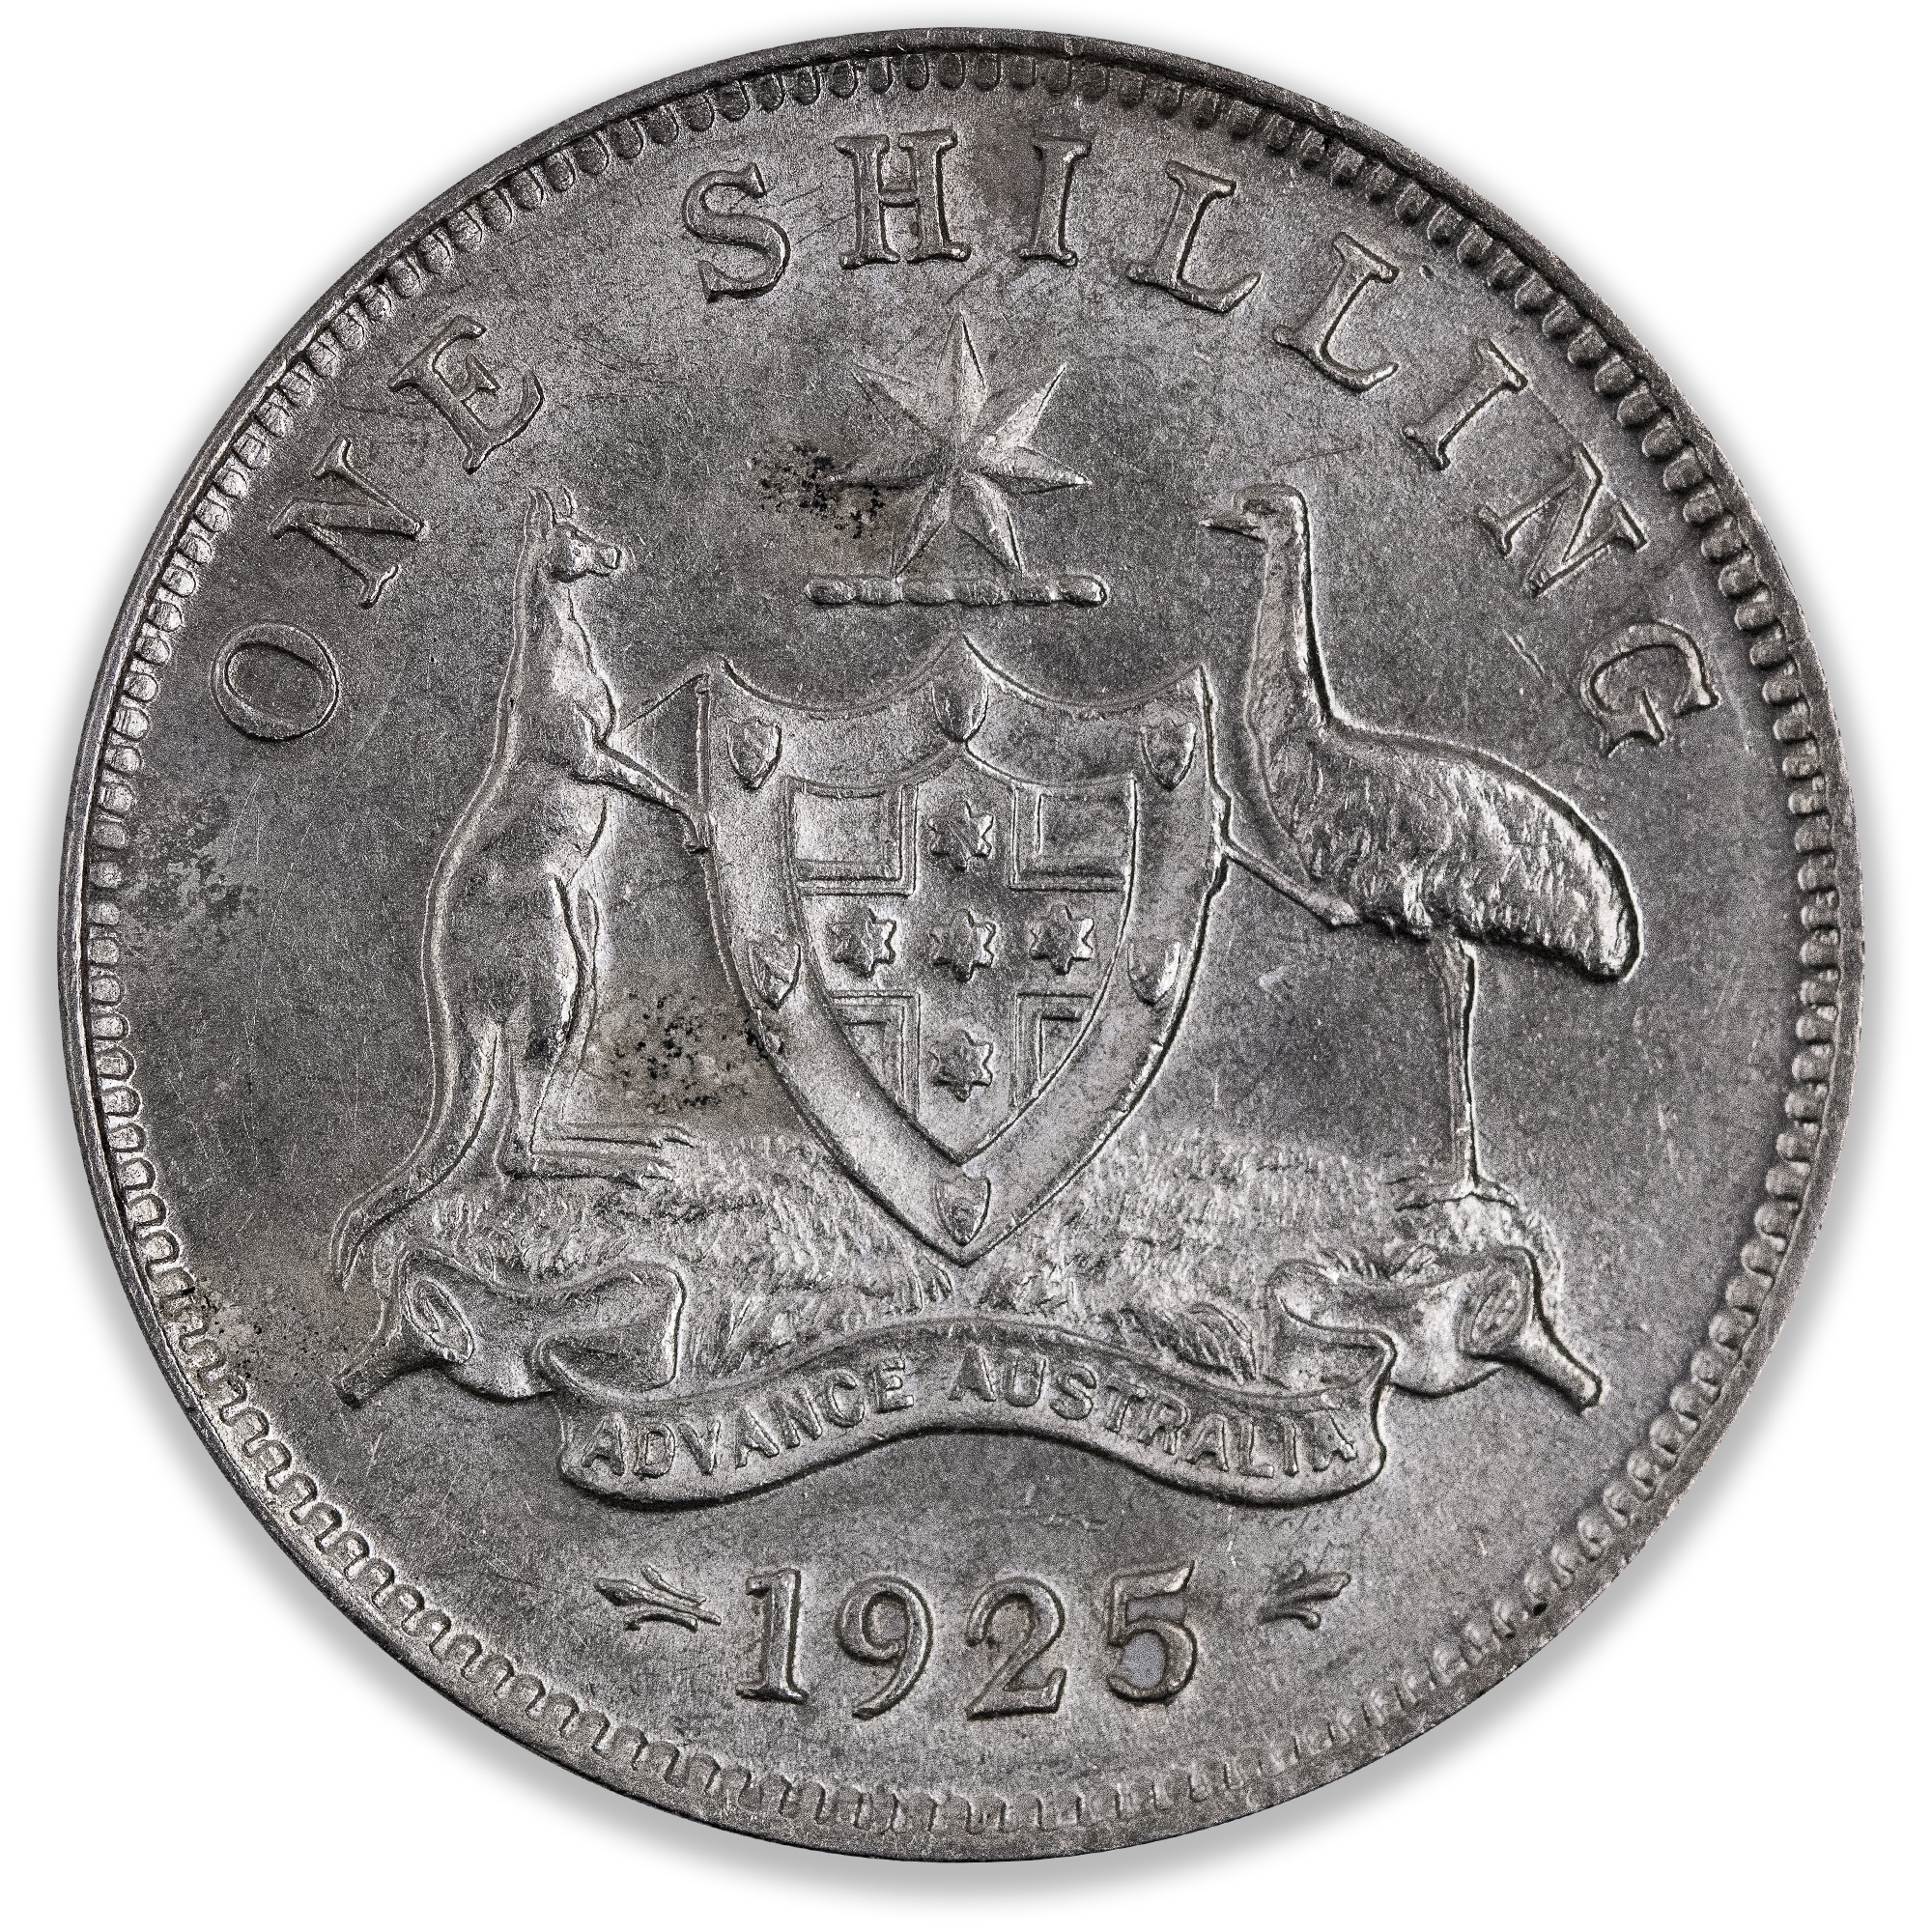 1925 Australian Shilling Good Extra Fine